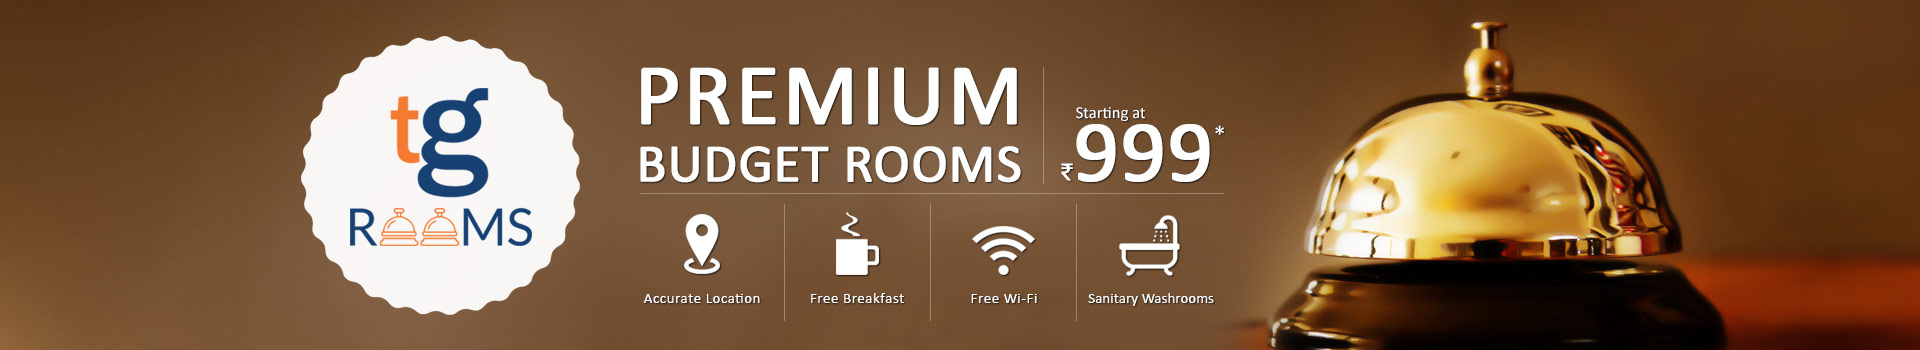 Premium Budget Rooms, Starting at Rs.999*